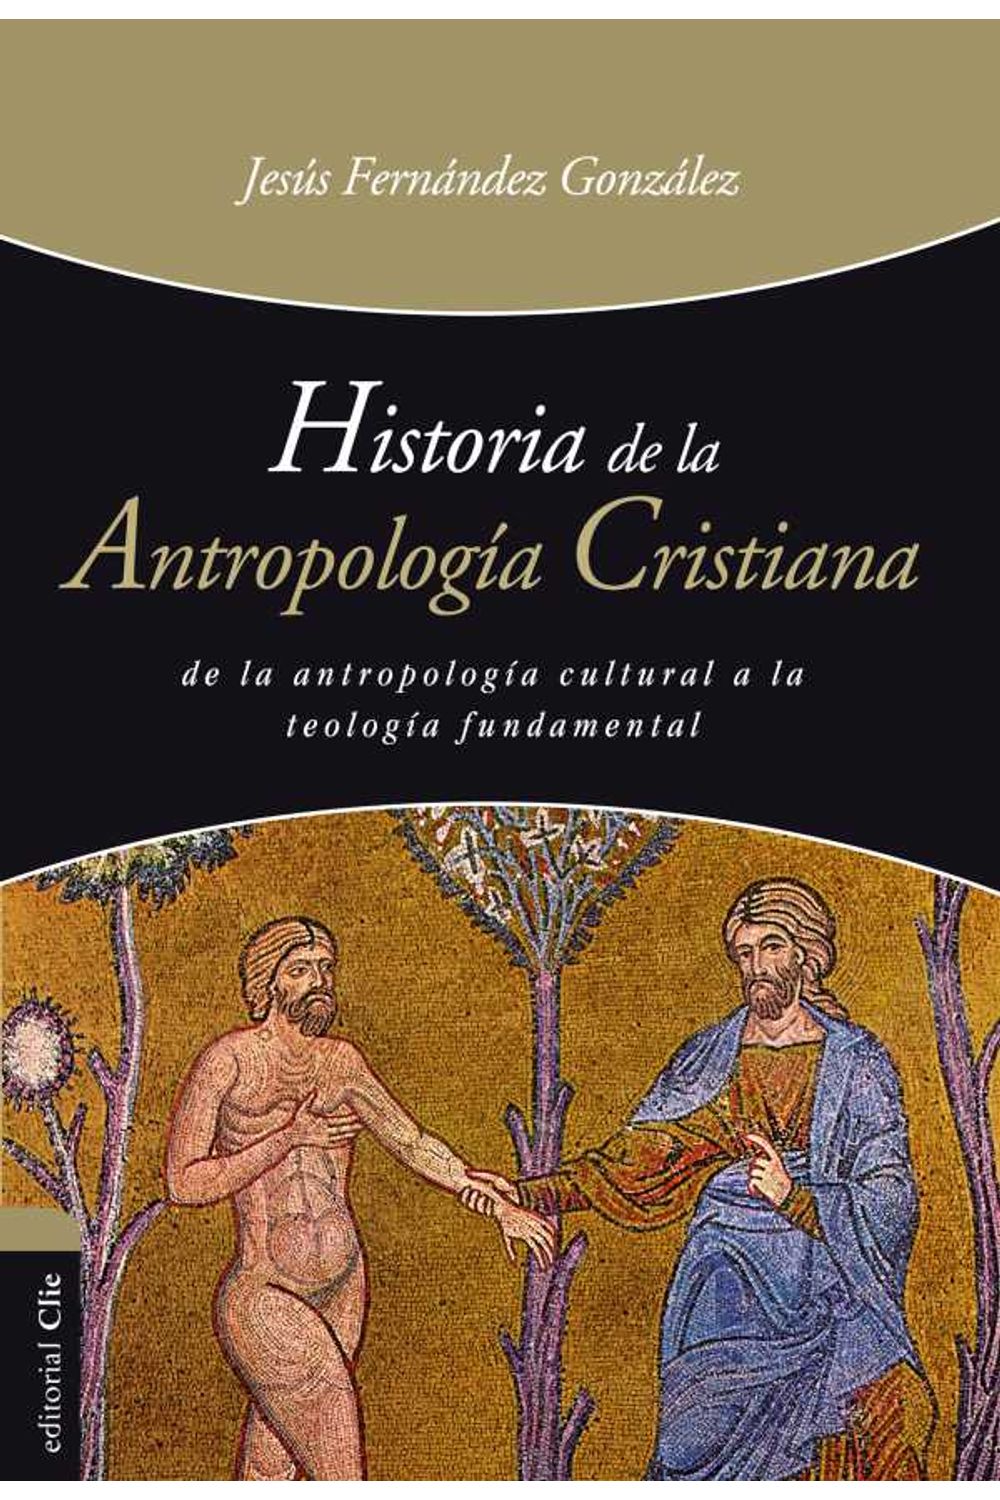 bw-historia-de-la-antropologiacutea-cristiana-editorial-clie-9788416845422